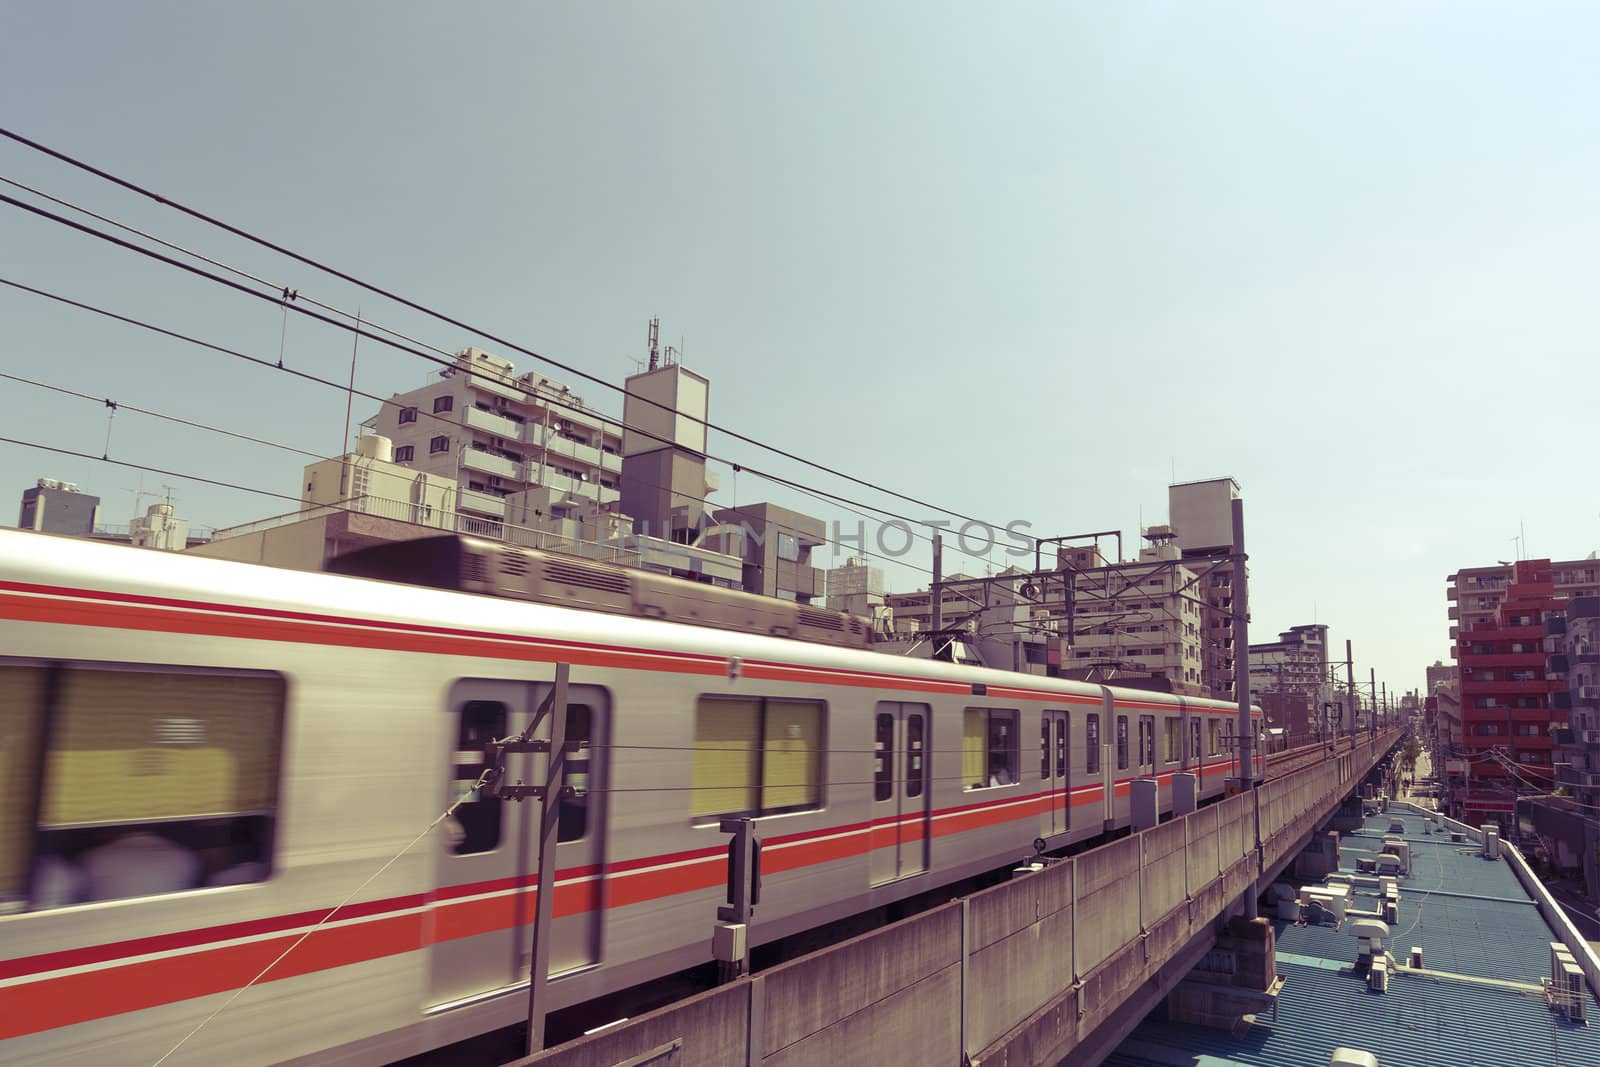 rapid train moves between Tokyo buildings by hanged up railway road